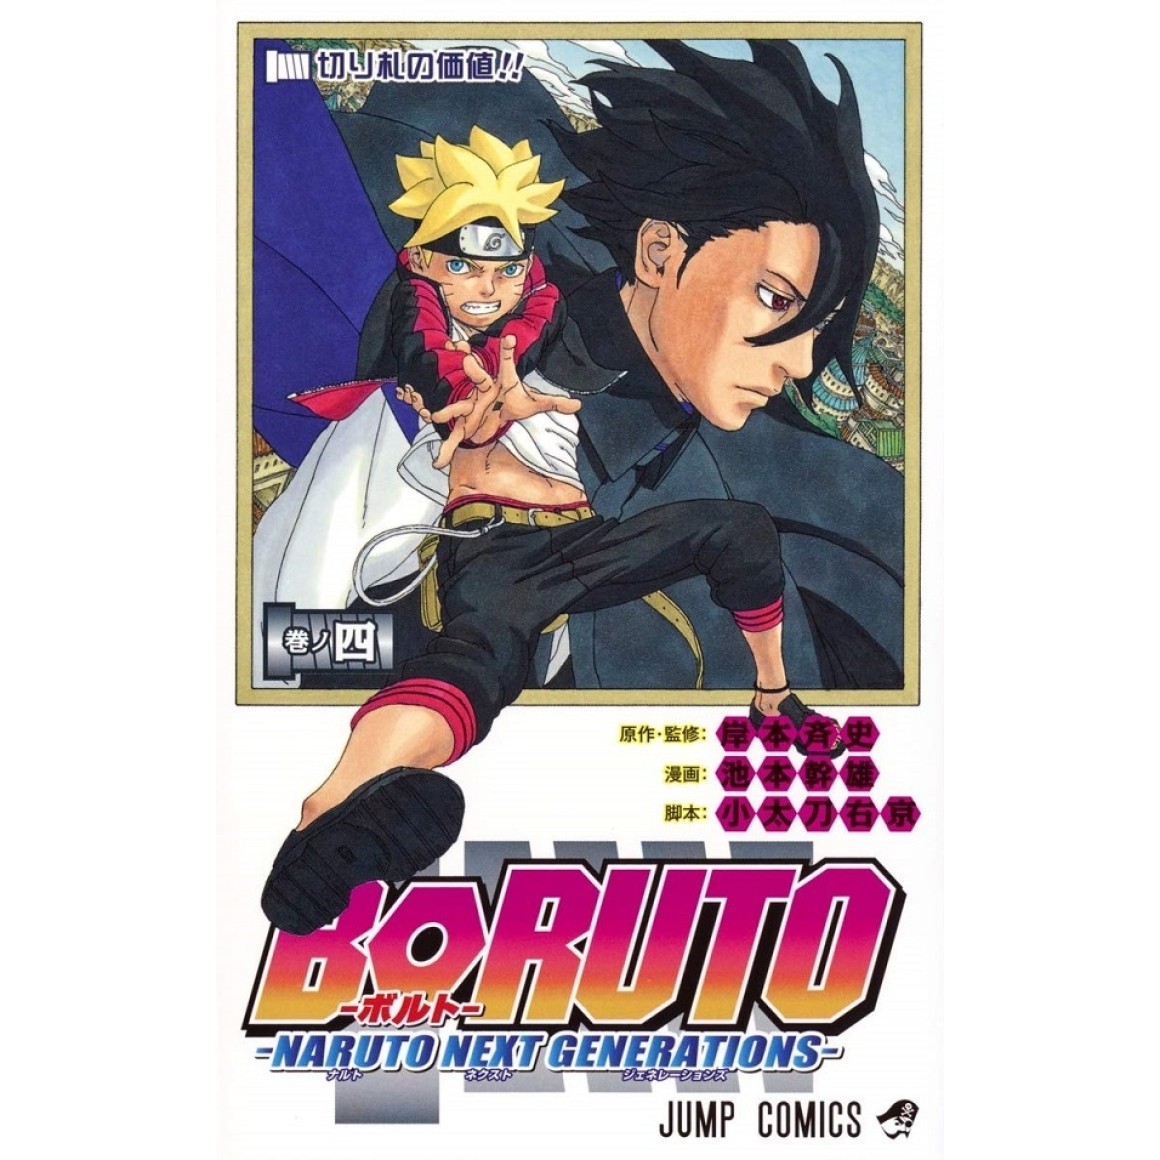 Boruto Vol. 19 - Naruto Next Generations - ISBN:9784088833828